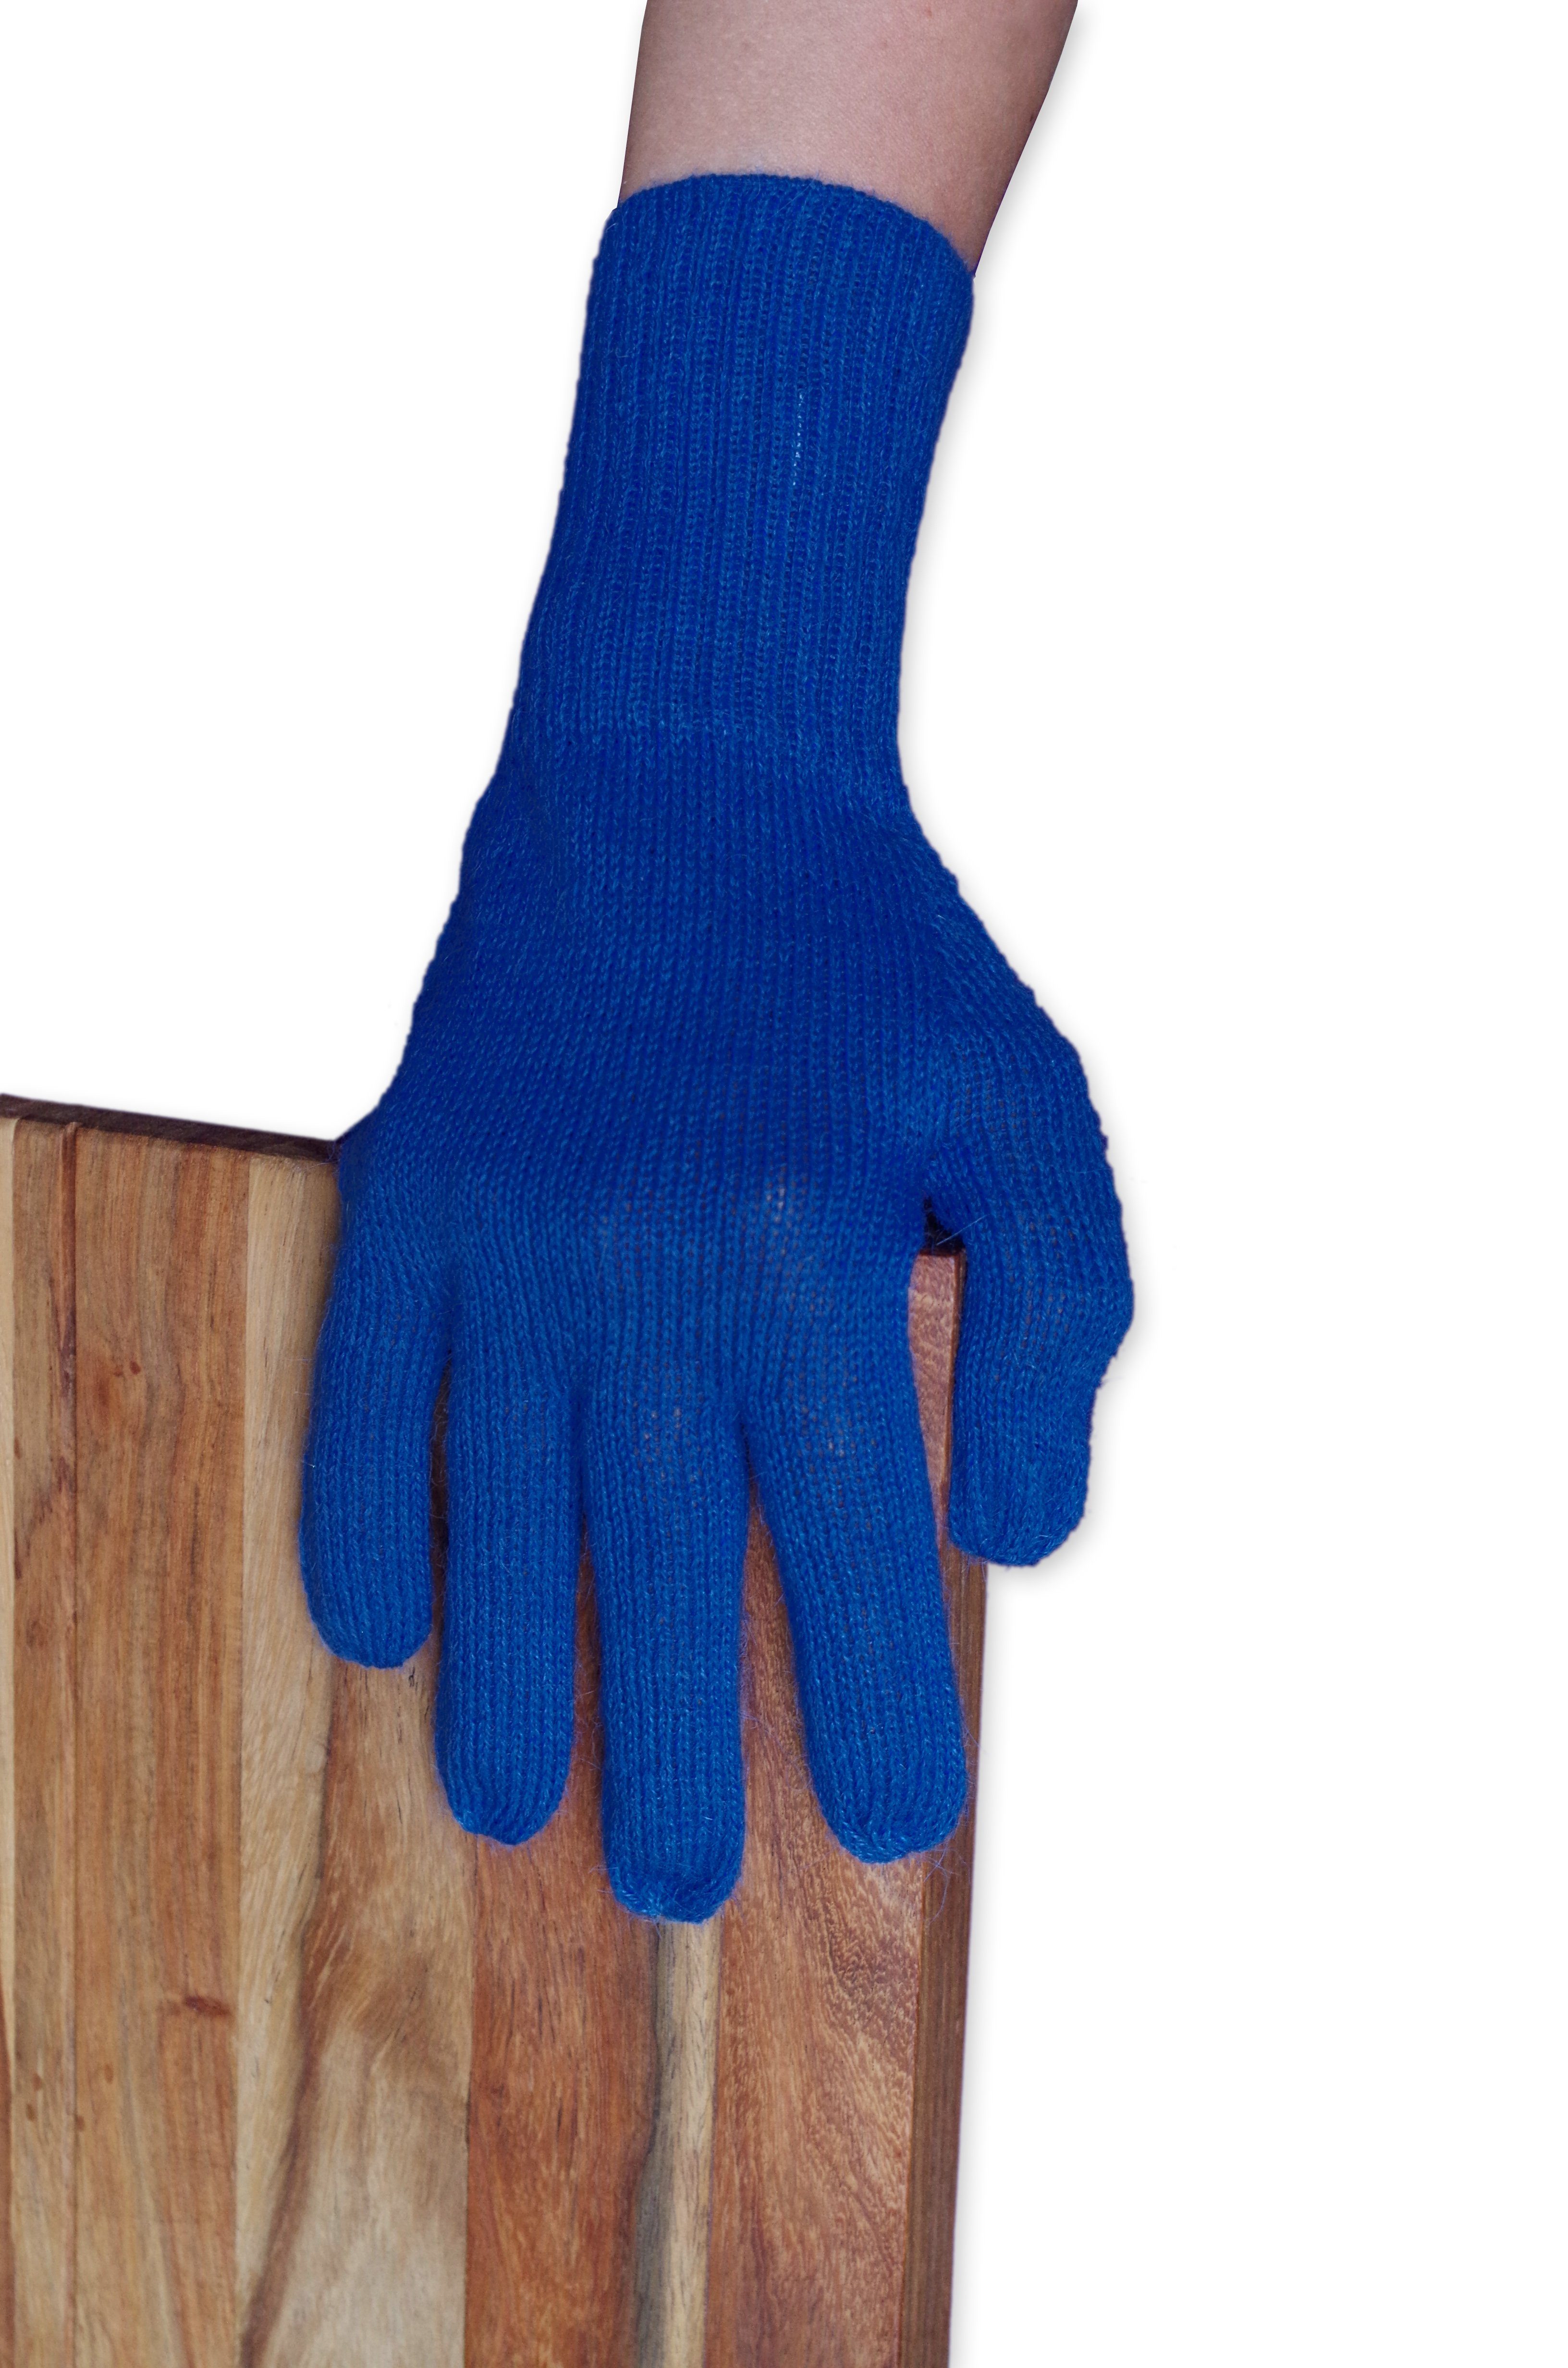 Posh Gear Strickhandschuhe Guantino Alpaka blau aus Fingerhandschuhe 100% Alpakawolle dunkel